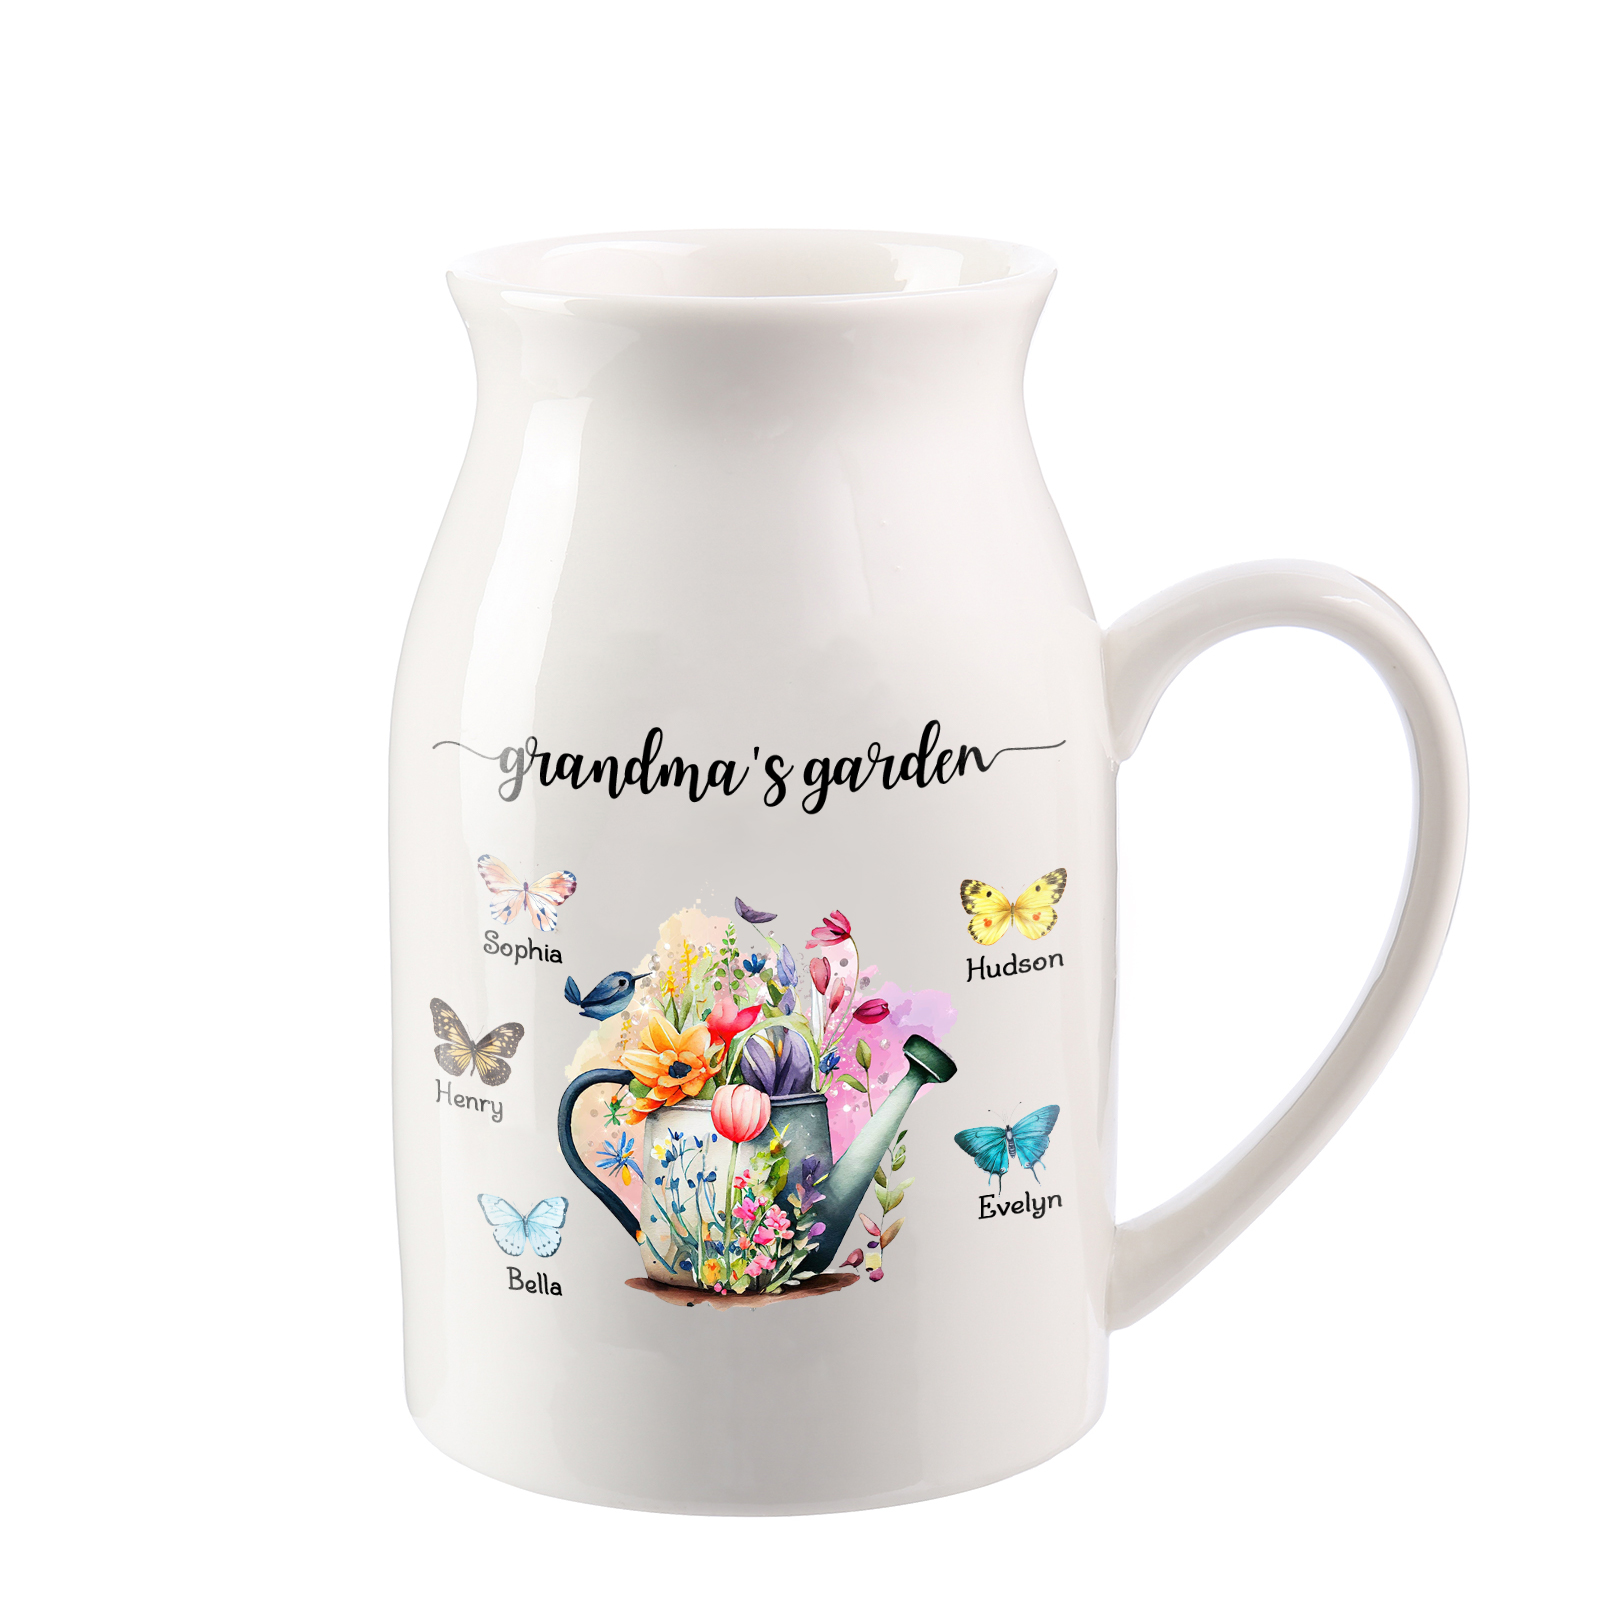 5 Names - Personalized Name "Grandma's Garden" Ceramic Vase as a Gift